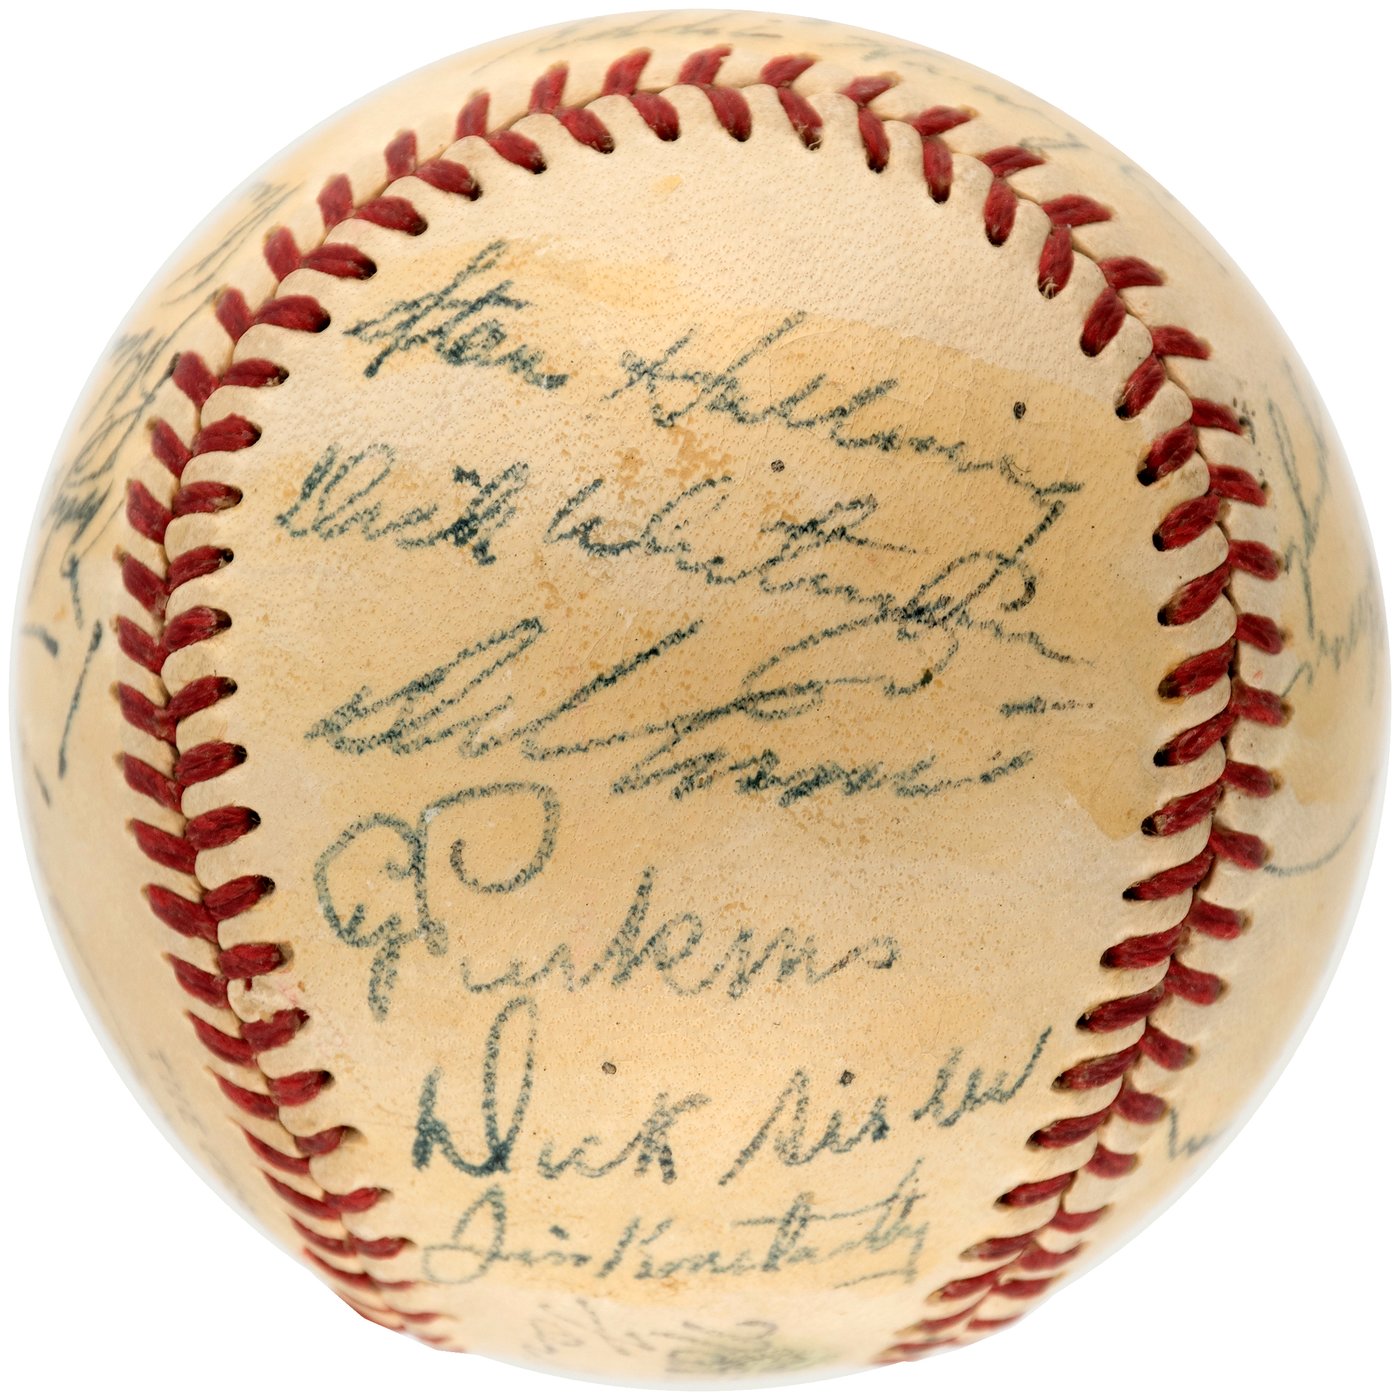 Sold at Auction: 1950 Bill Nicholson Philadelphia Phillies